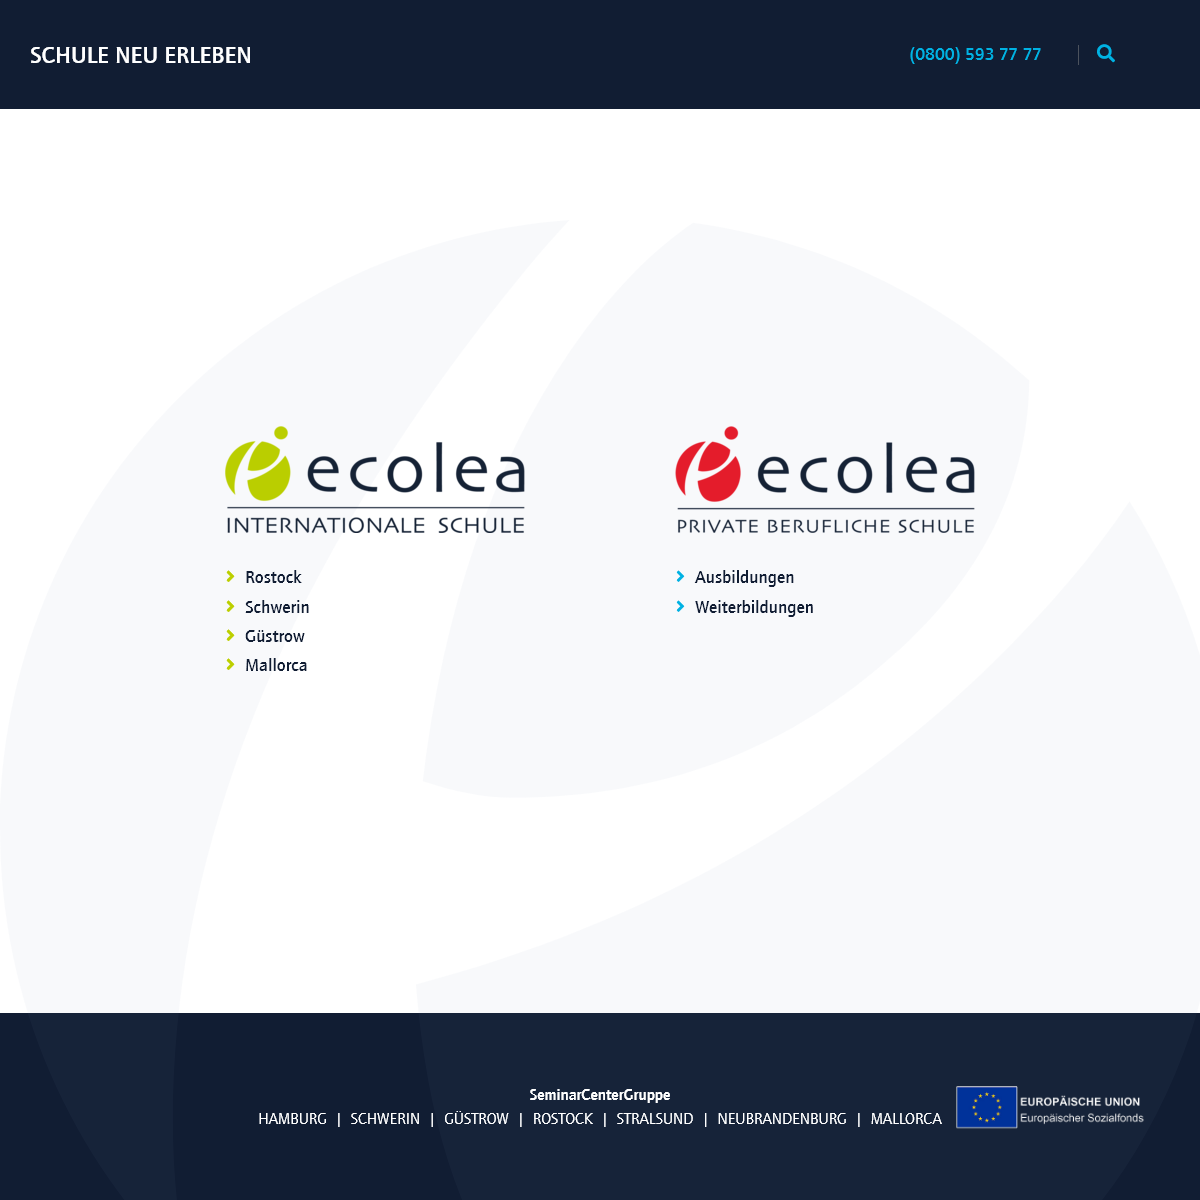 A complete backup of ecolea.de